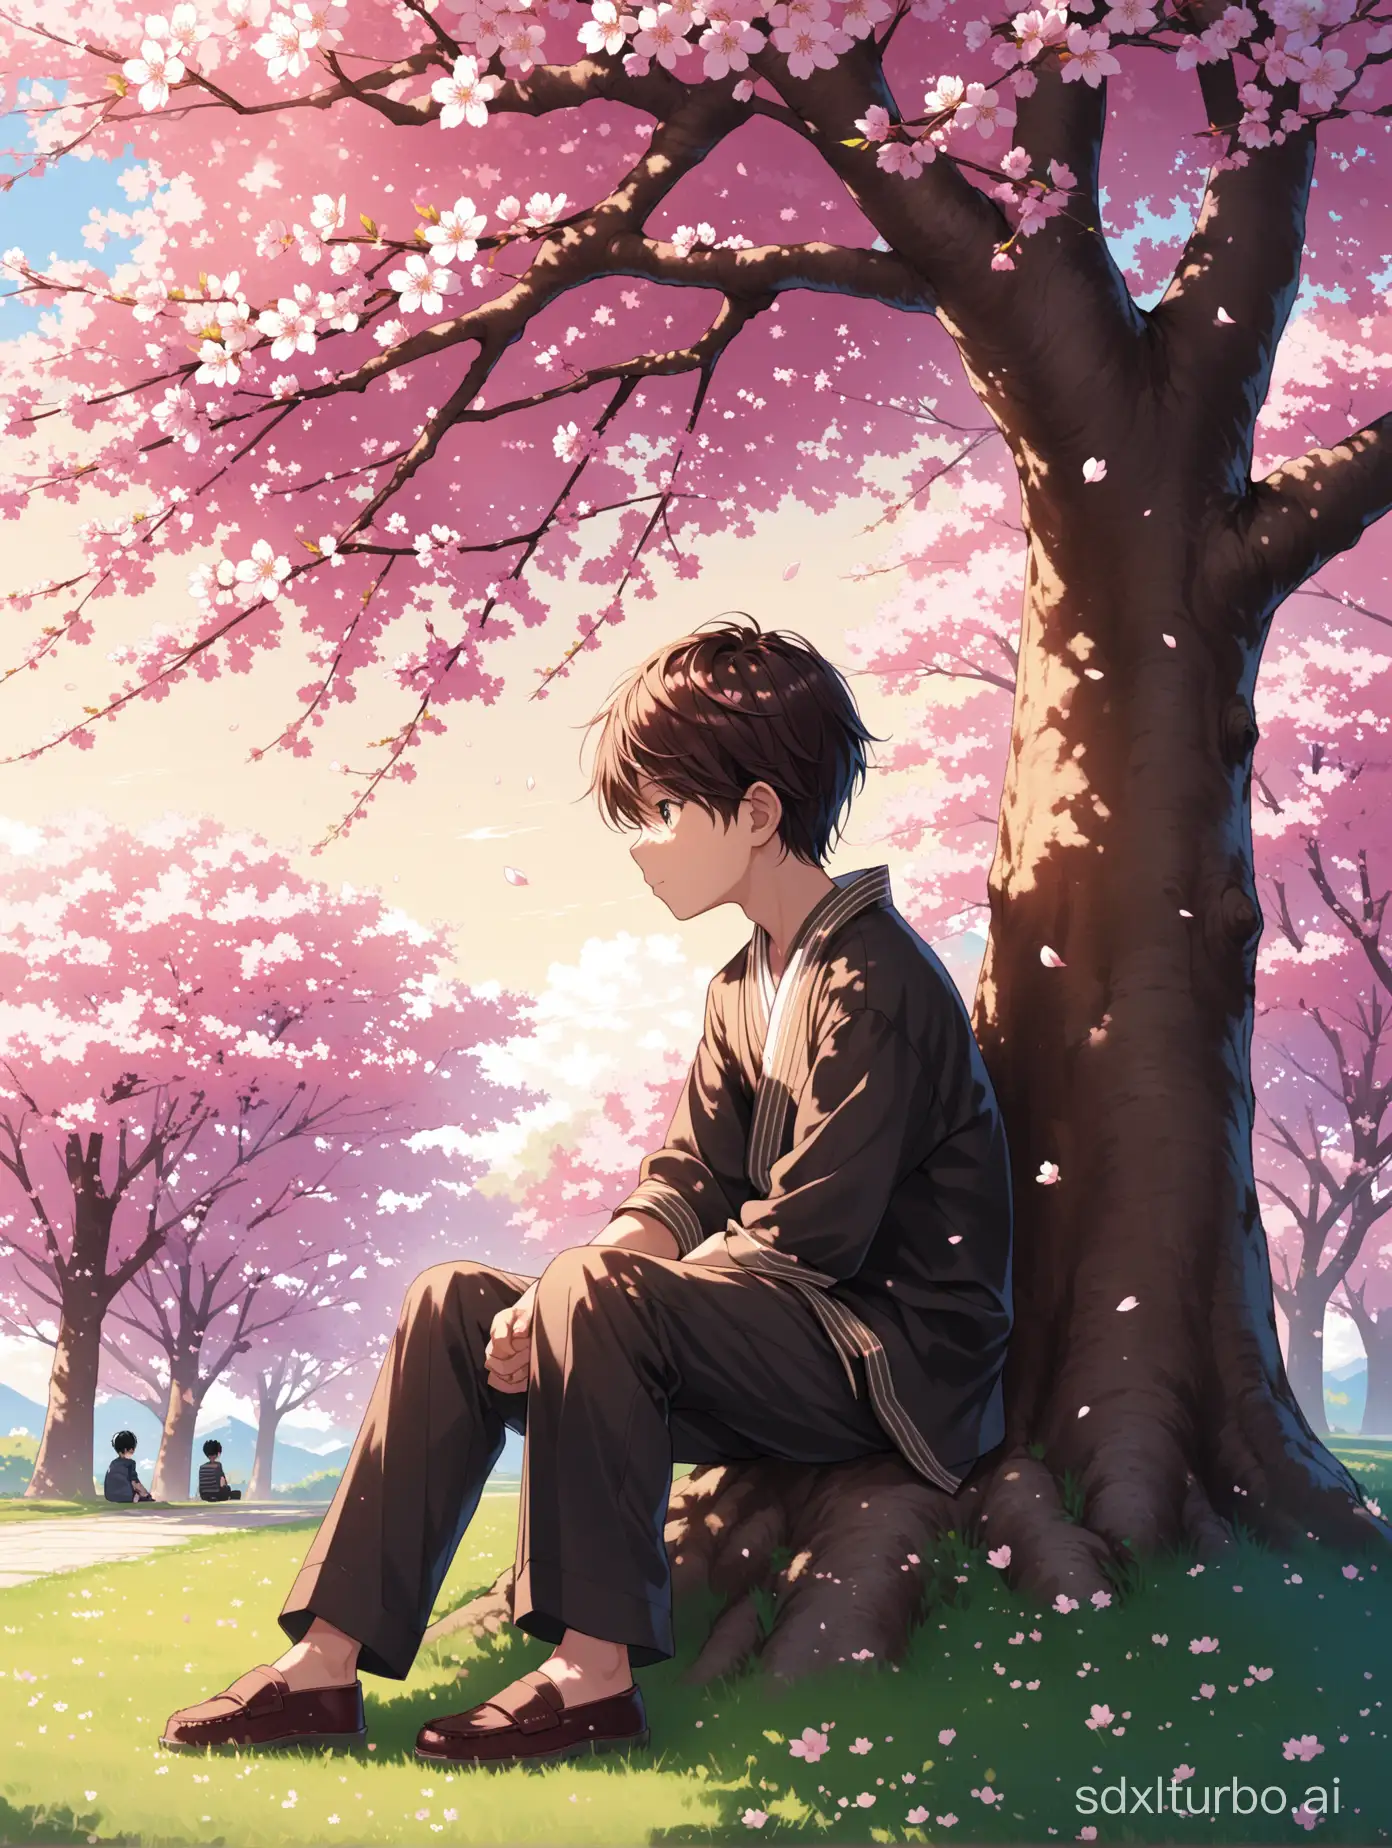 The boy sat under a cherry blossom tree.